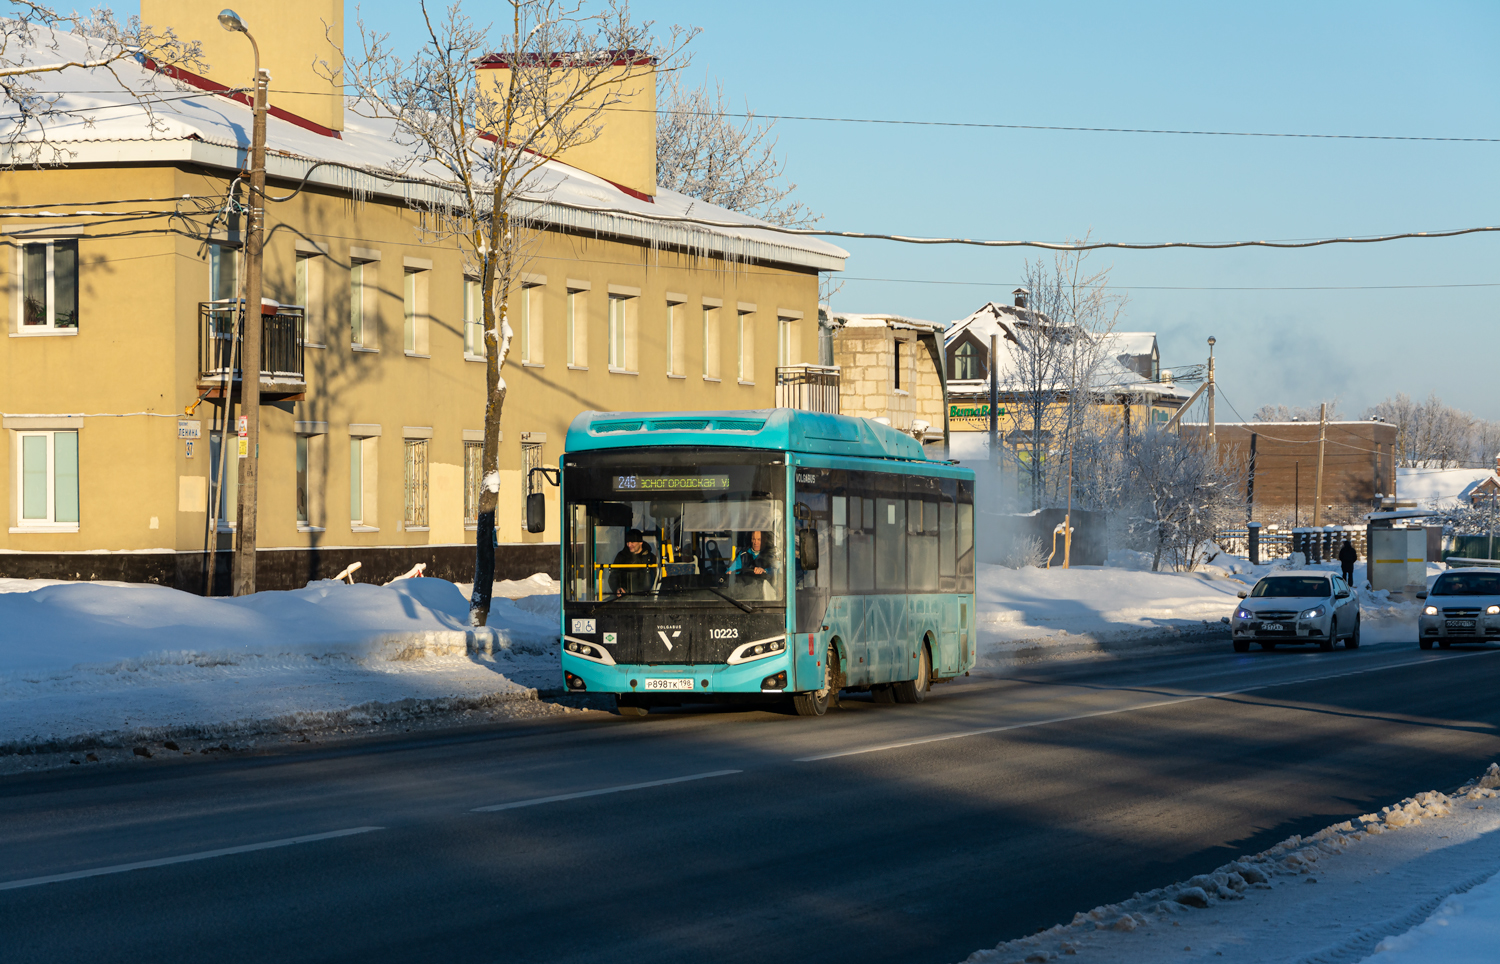 Saint Petersburg, Volgabus-4298.G4 (CNG) # 10223